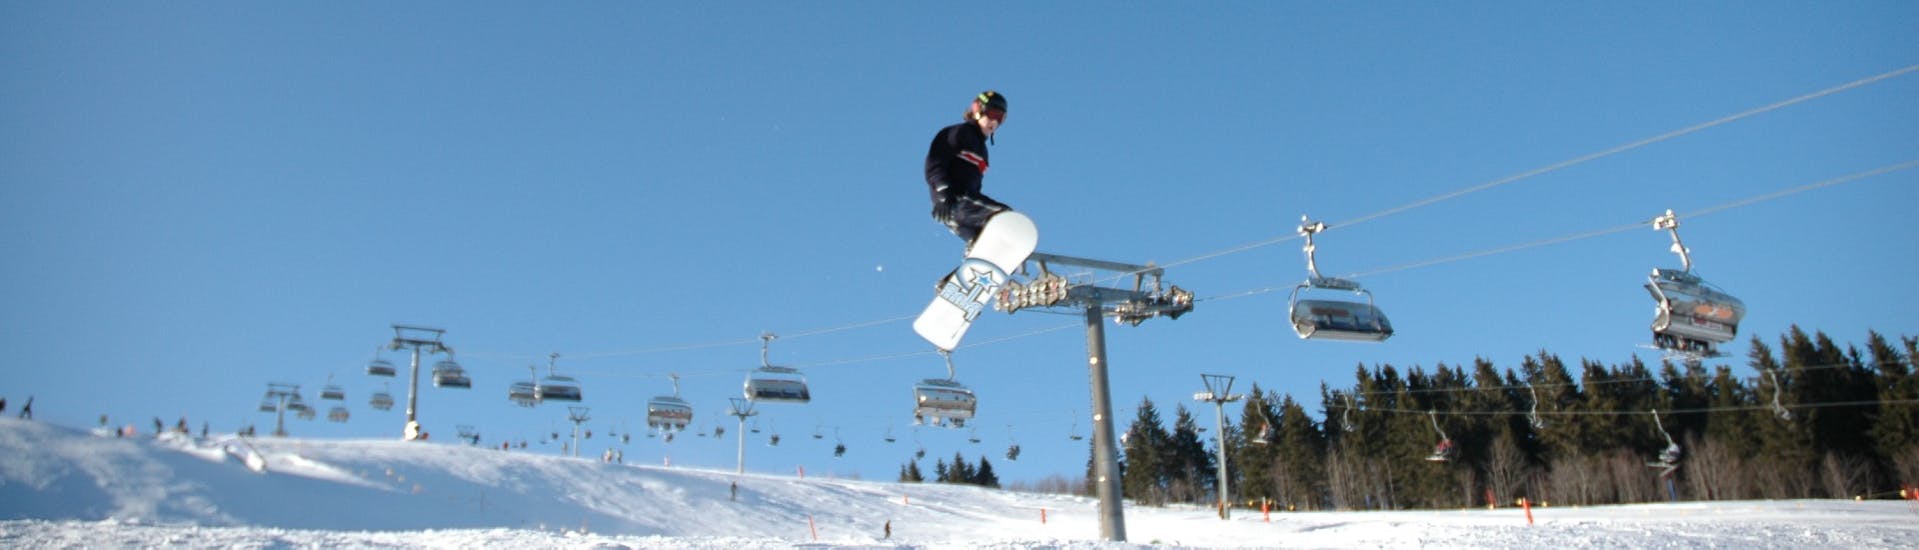 Lezioni private di Snowboard a partire da 7 anni per tutti i livelli.